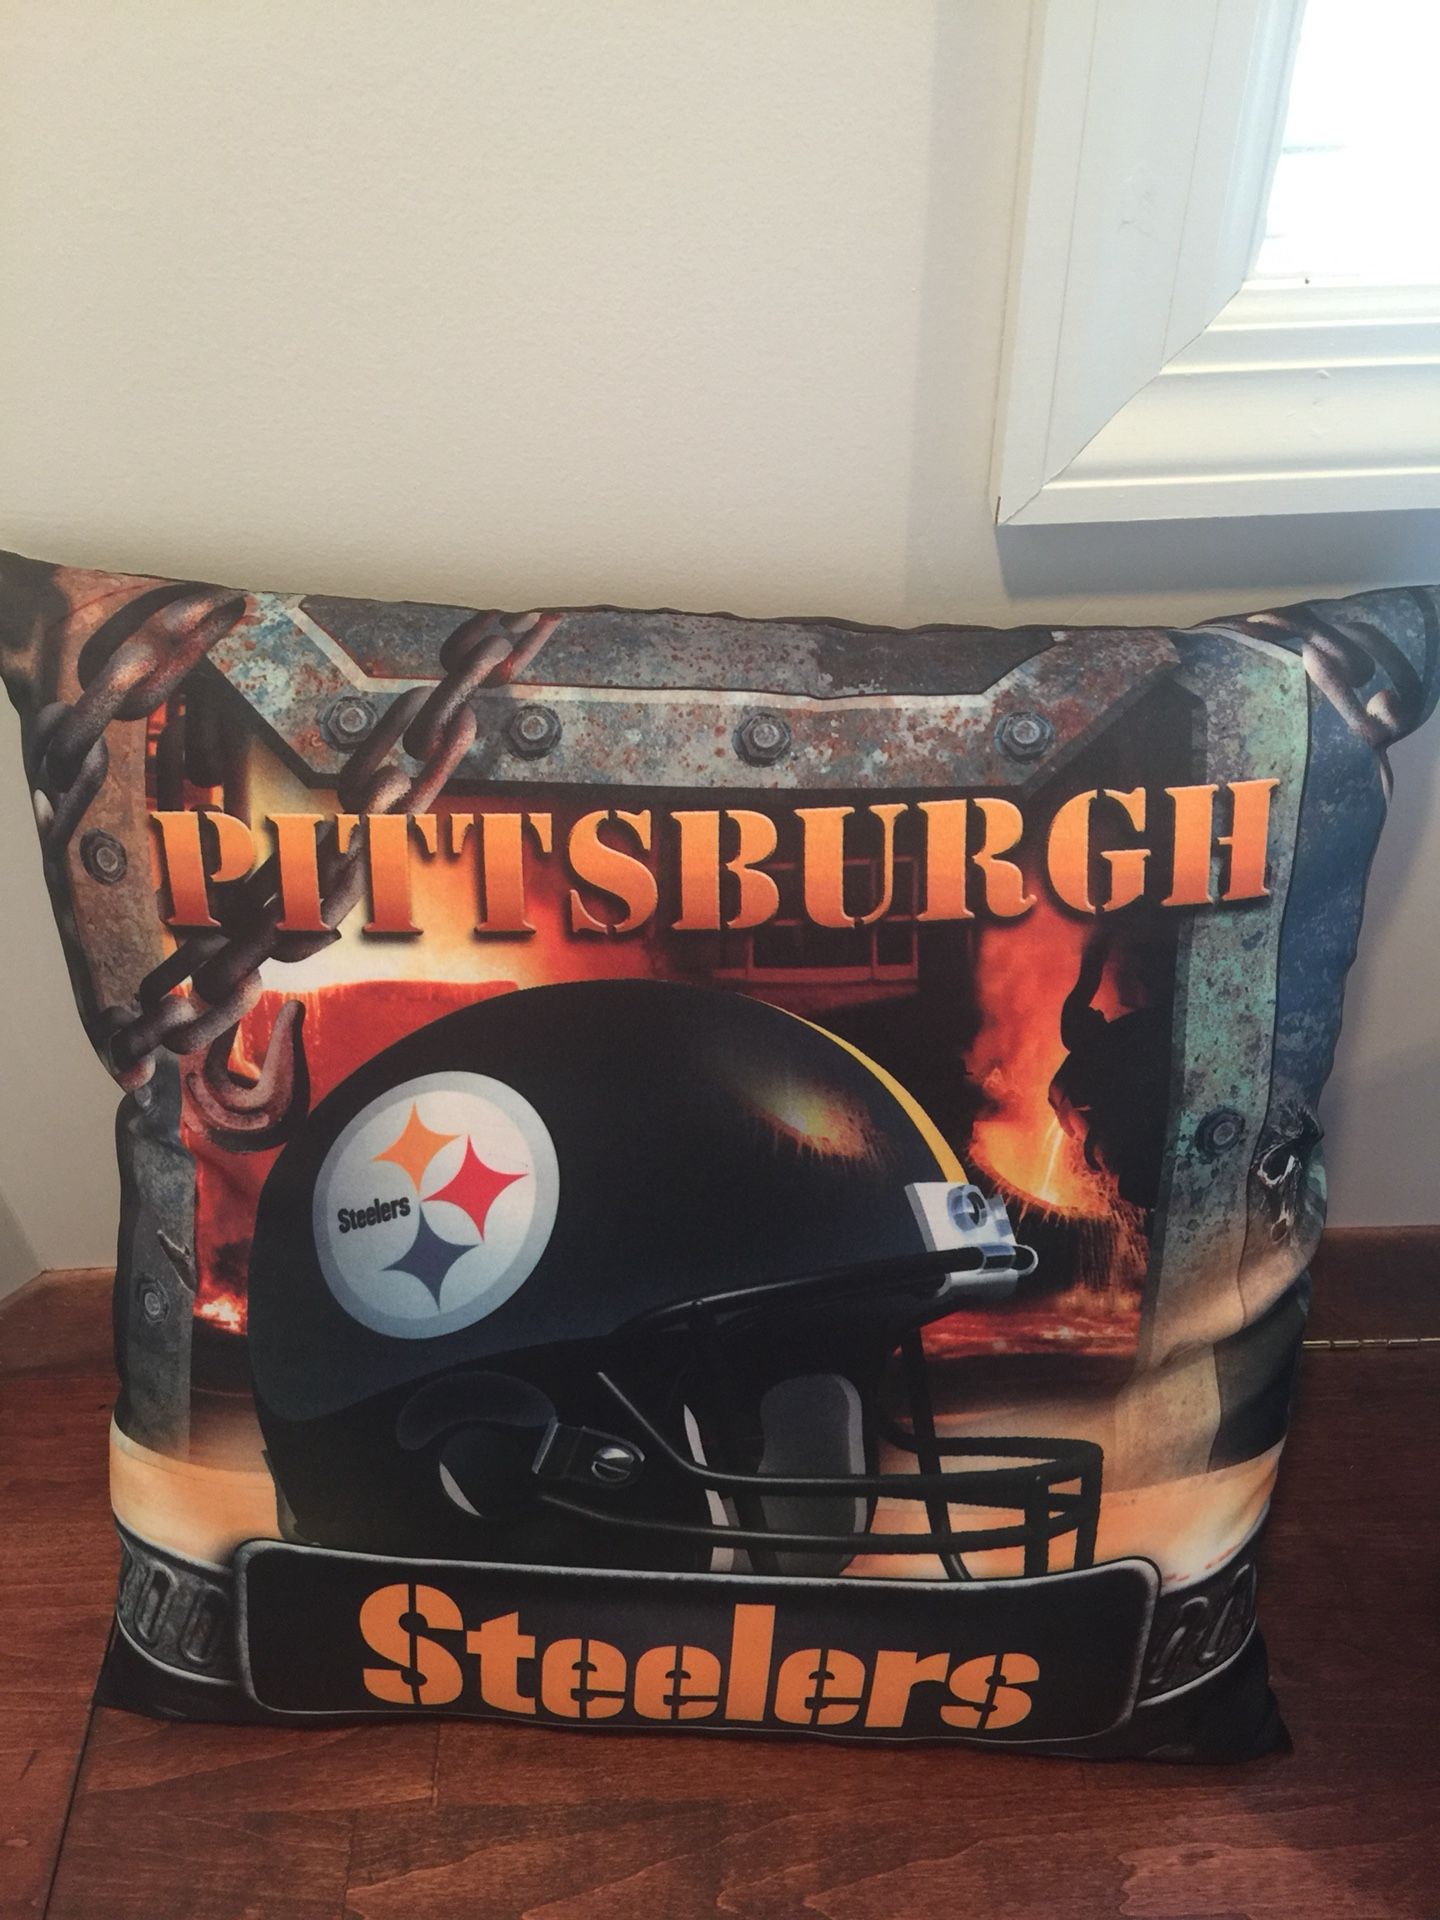 Steelers decor- nightlight and pillow